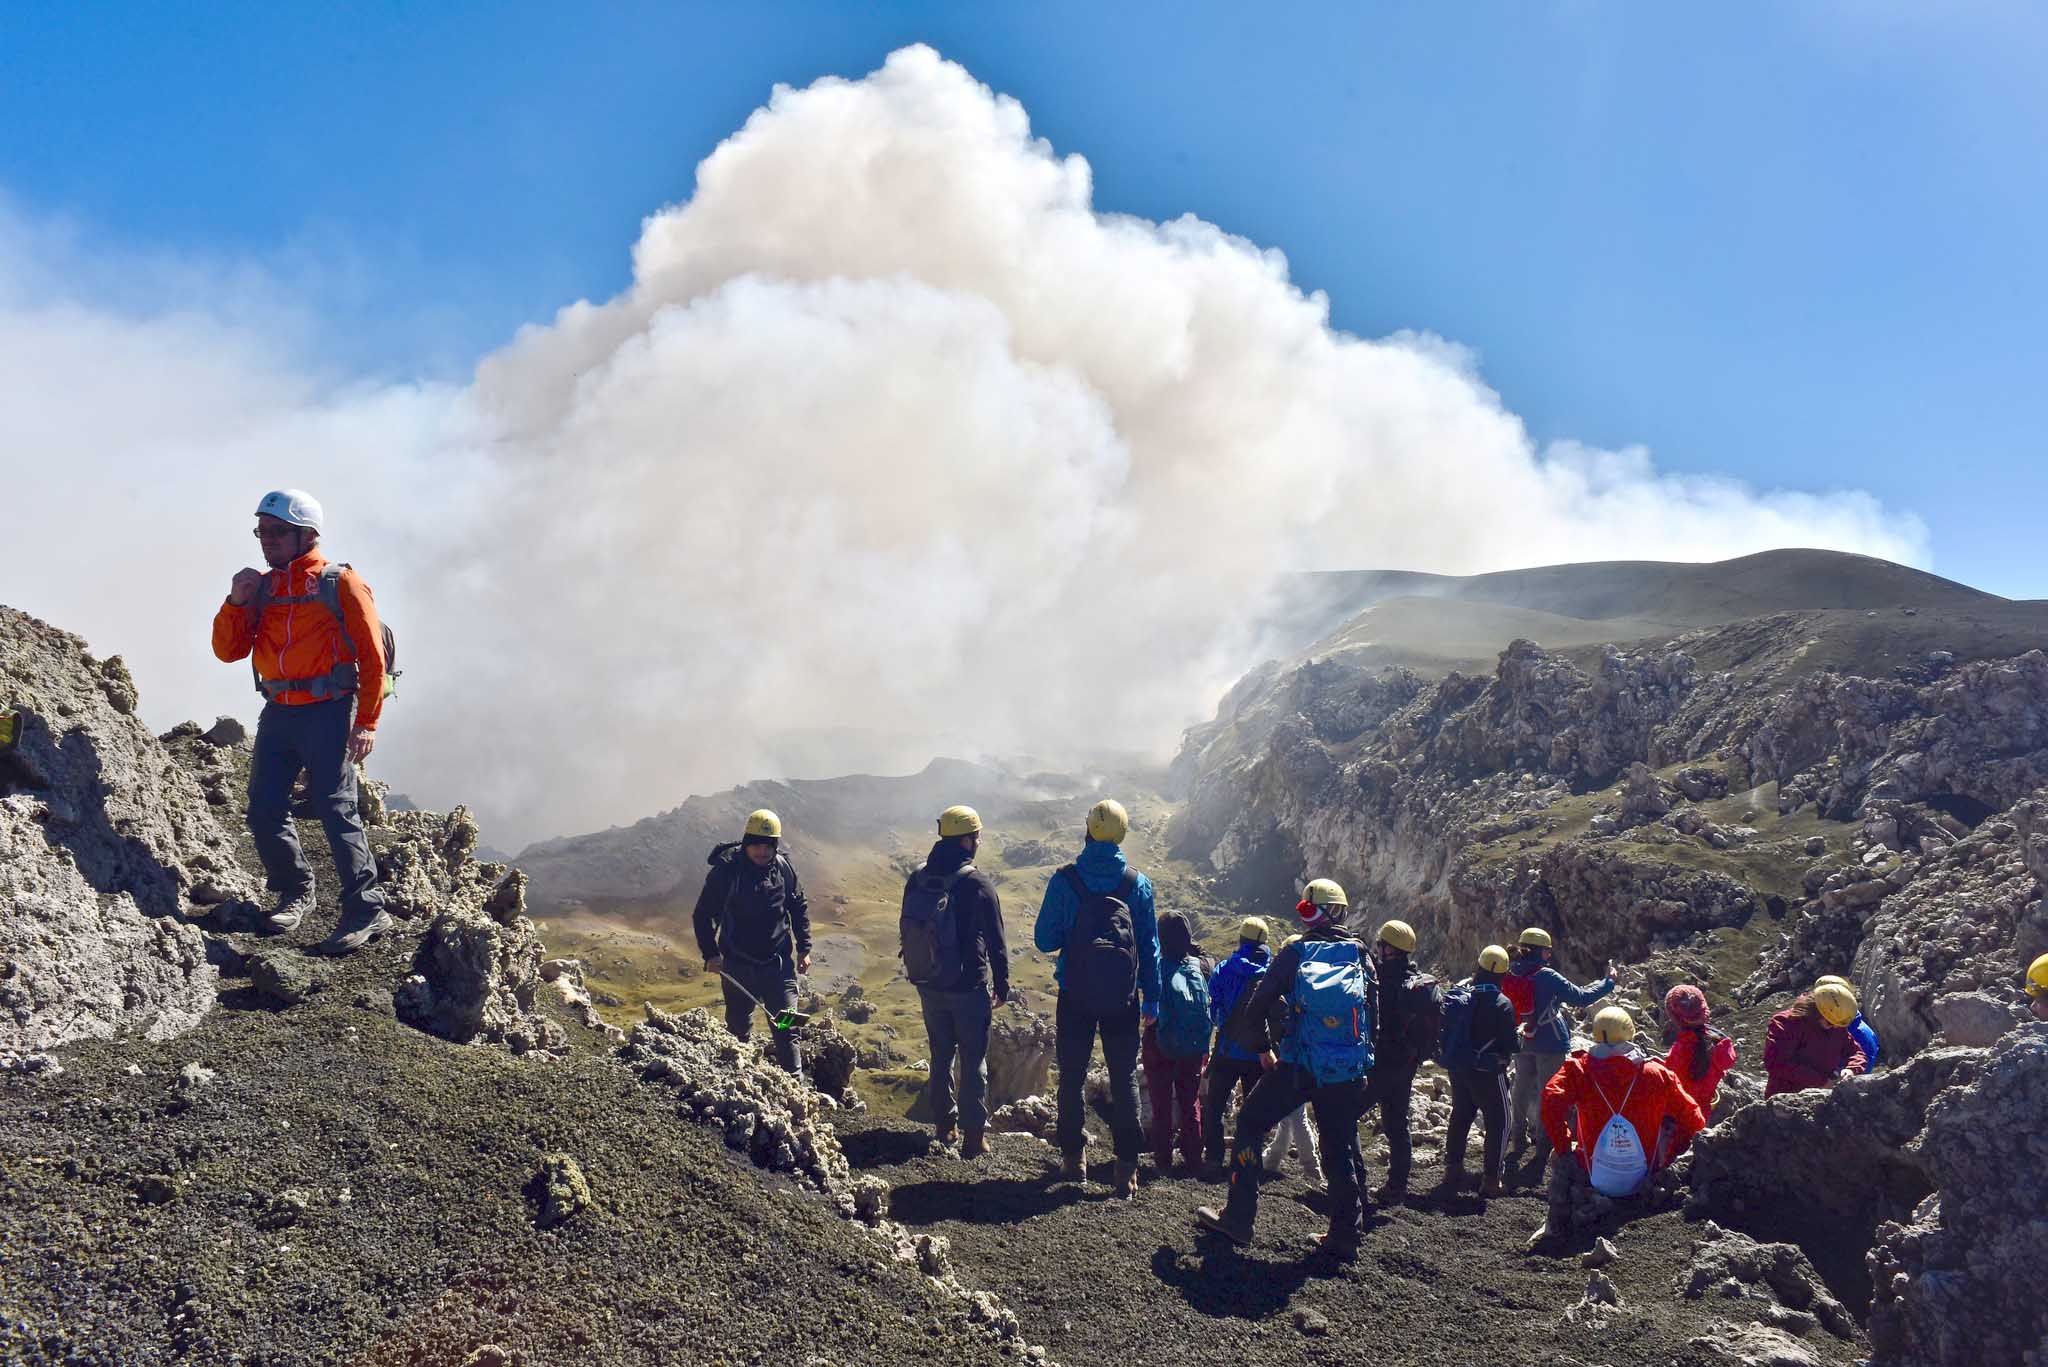 Etna: turista dispersa sul versante sud, ricerche